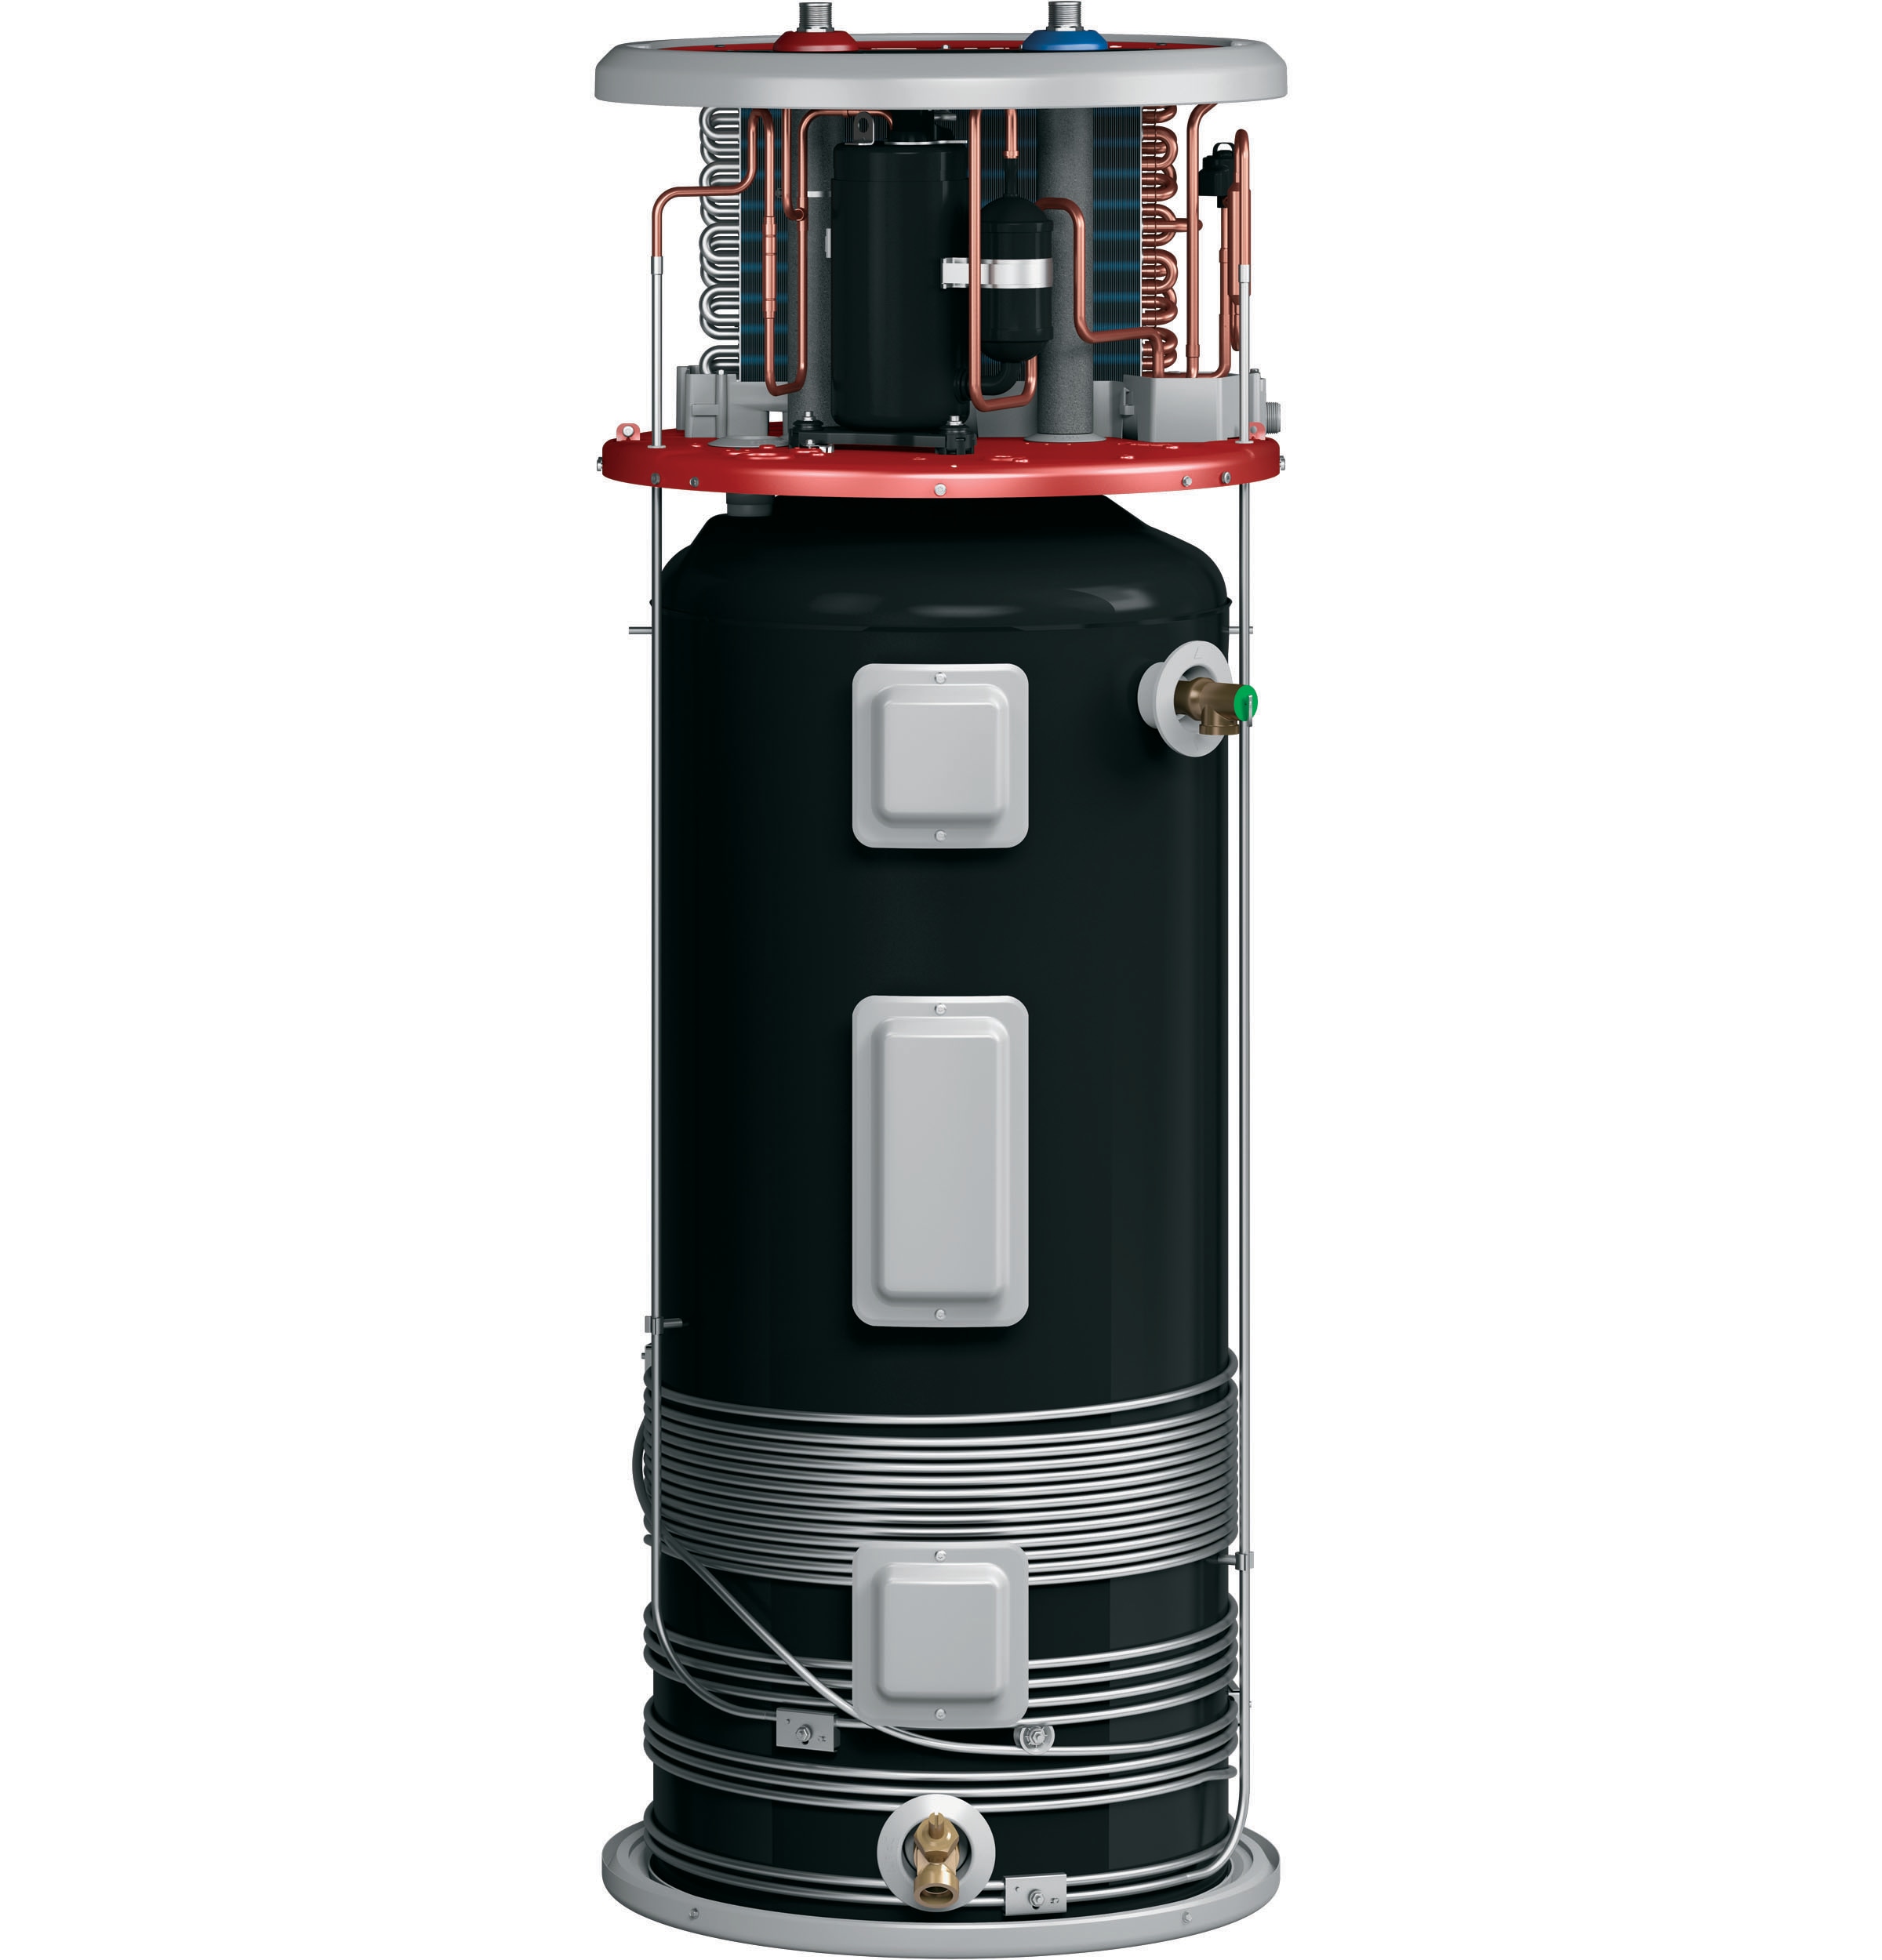 GeoSpring™ hybrid electric water heater - GEH50DFEJSR - GE Appliances